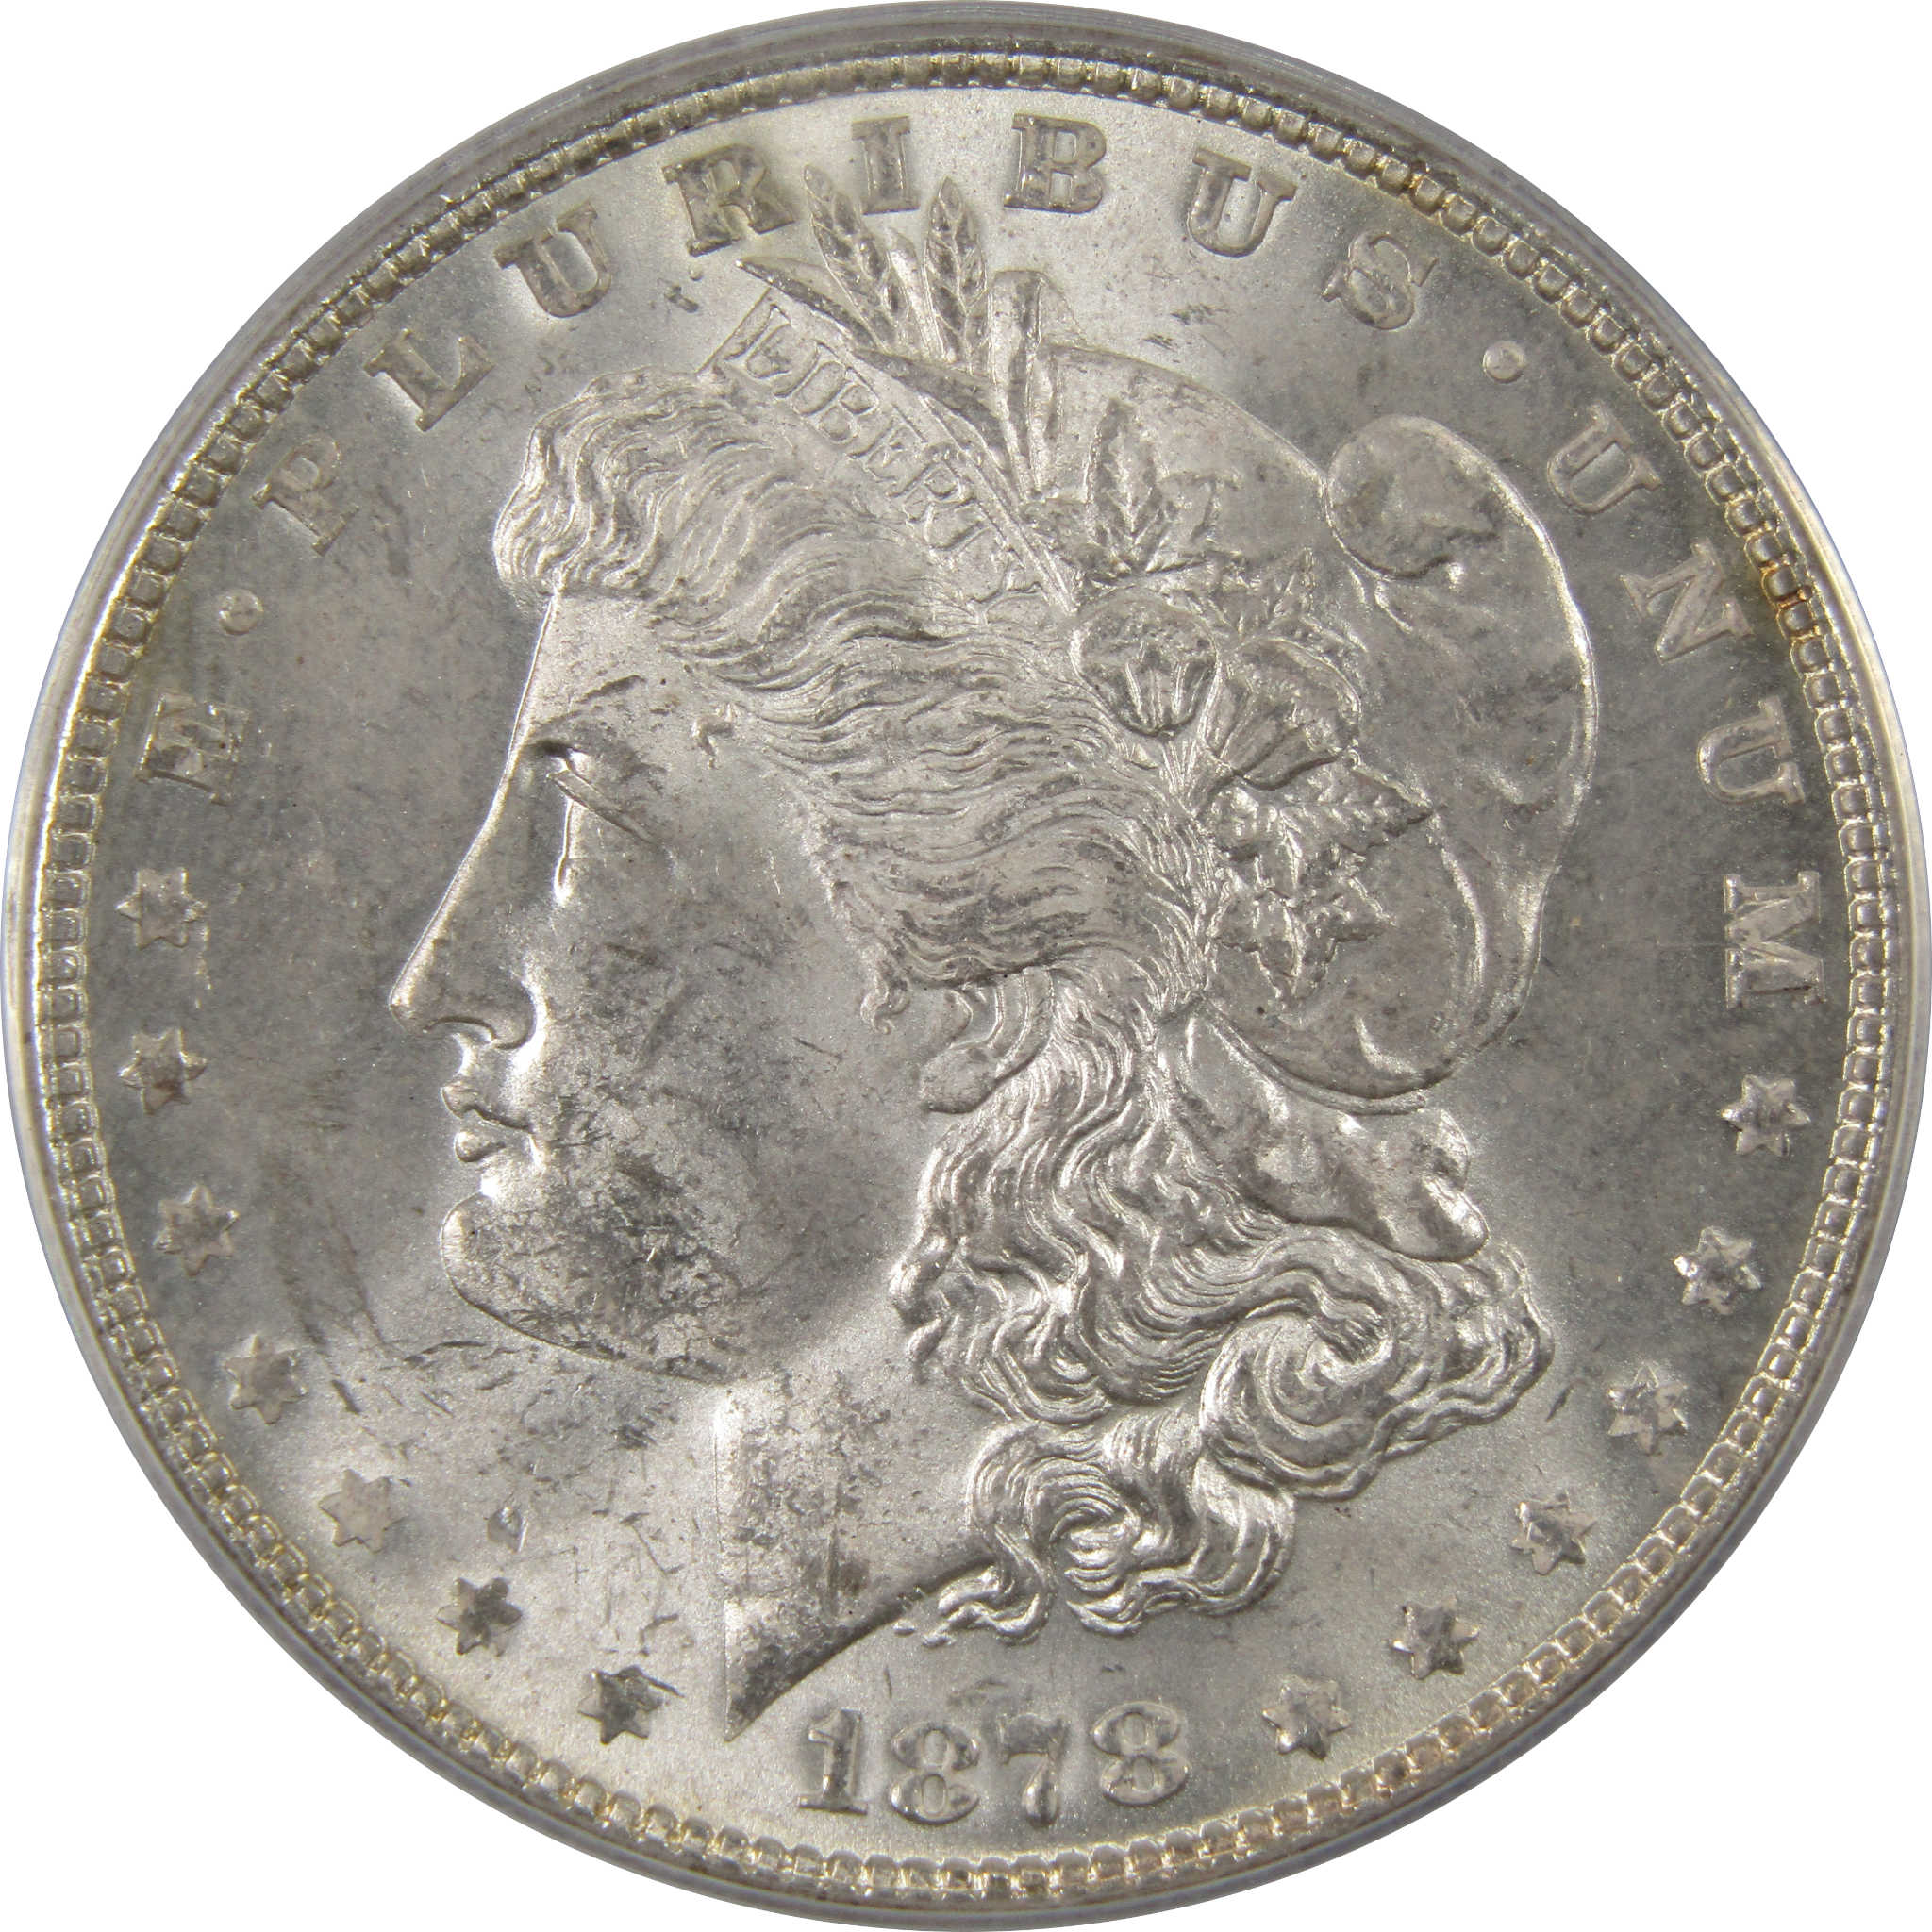 1878 7TF Rev 78 Morgan Dollar MS 63 ANACS 90% Silver $1 SKU:I10161 - Morgan coin - Morgan silver dollar - Morgan silver dollar for sale - Profile Coins &amp; Collectibles